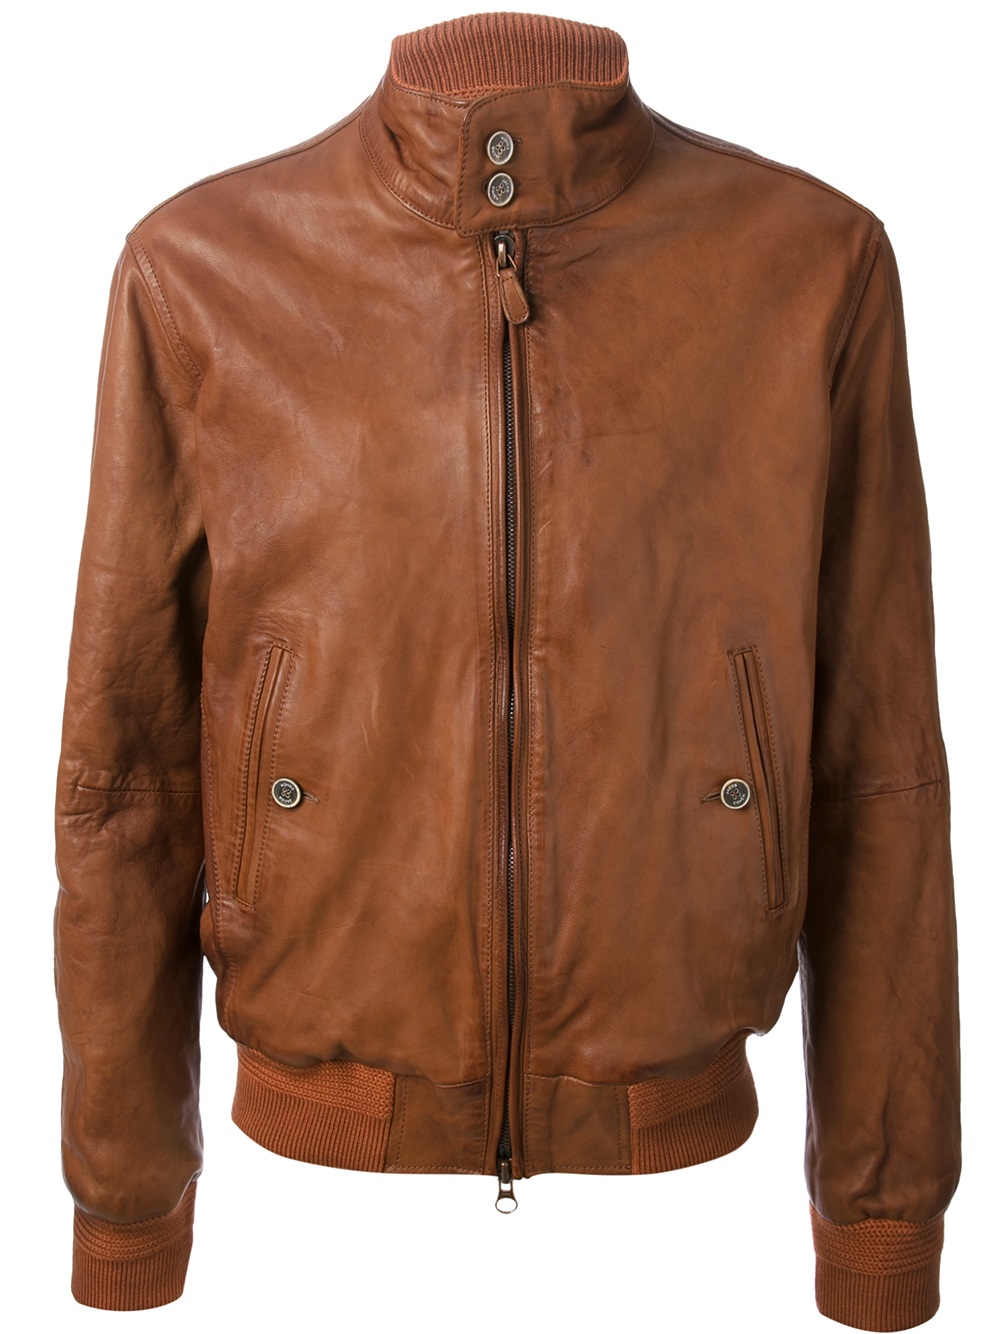 Jacob Cohen Zip Leather Jacket in Brown for Men - Lyst